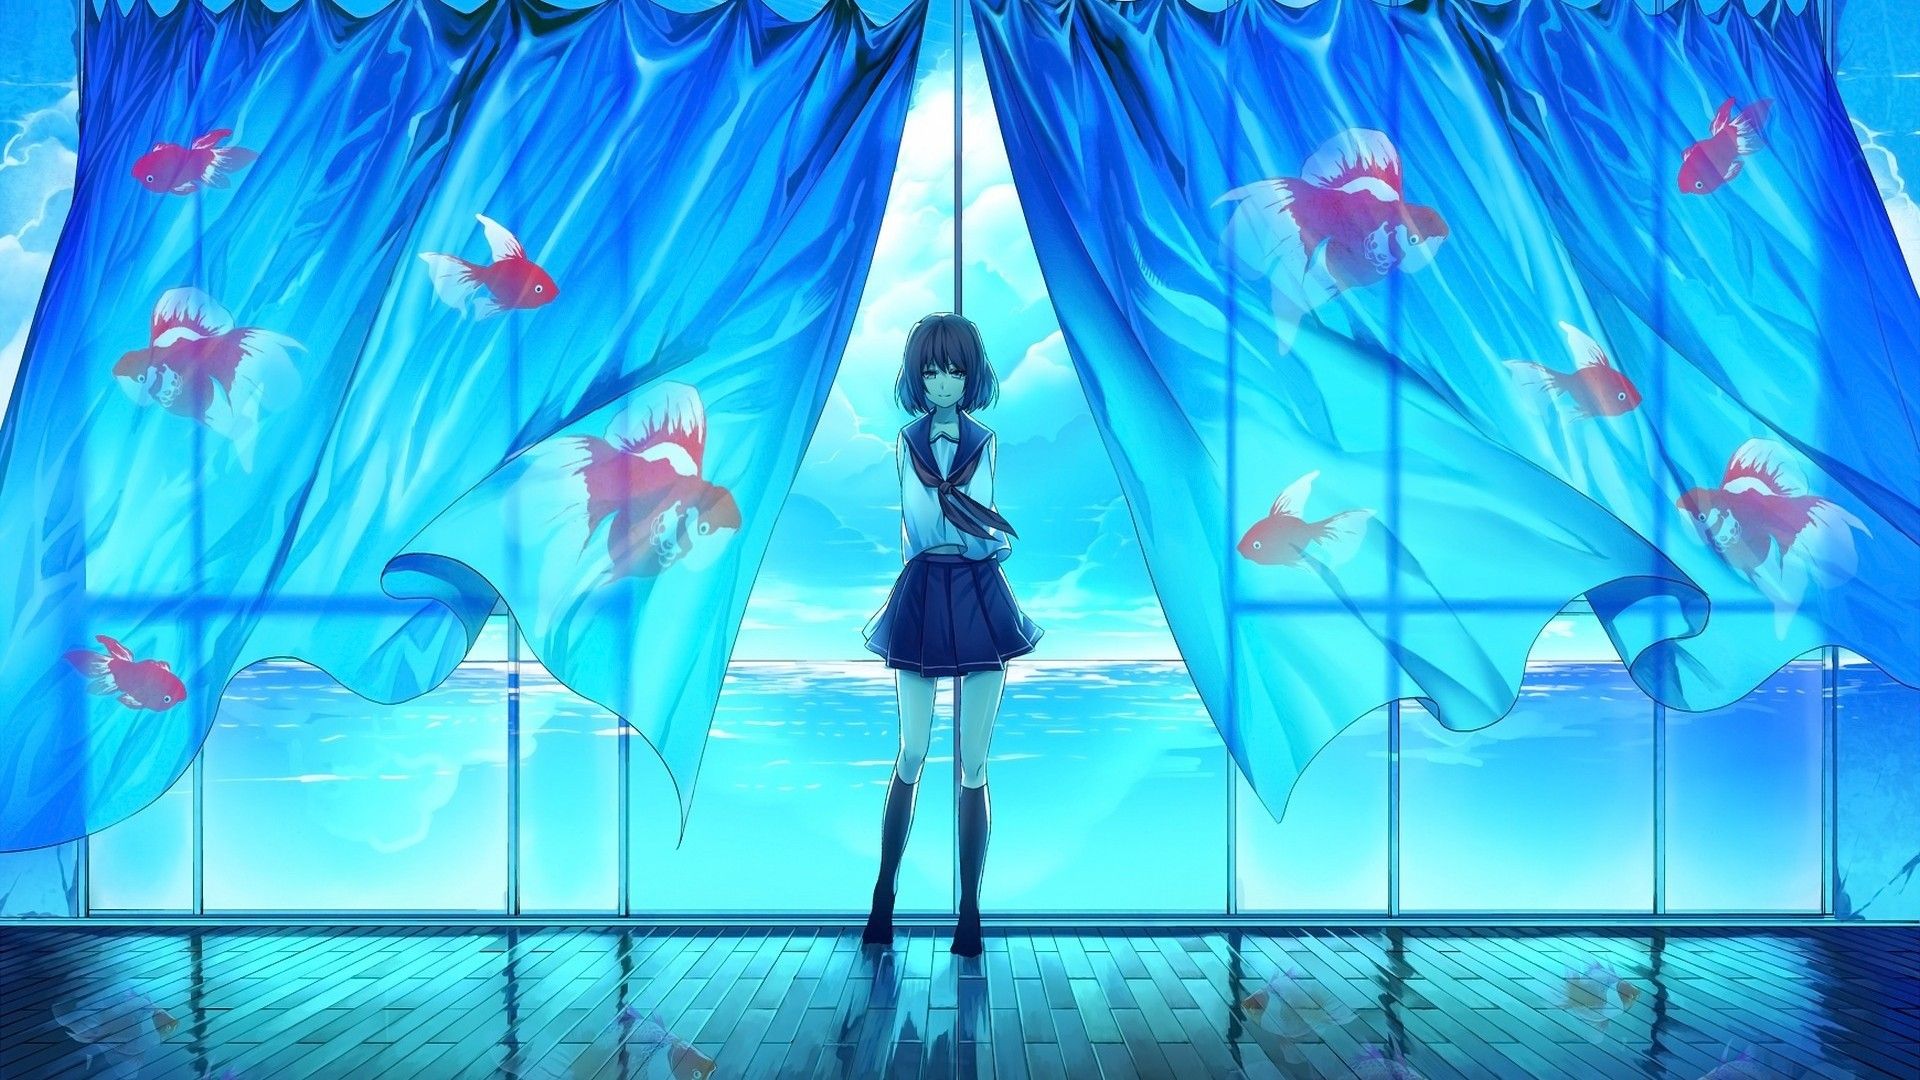 fish, school uniforms, curtains, anime girls, sea, upscaled wallpaper